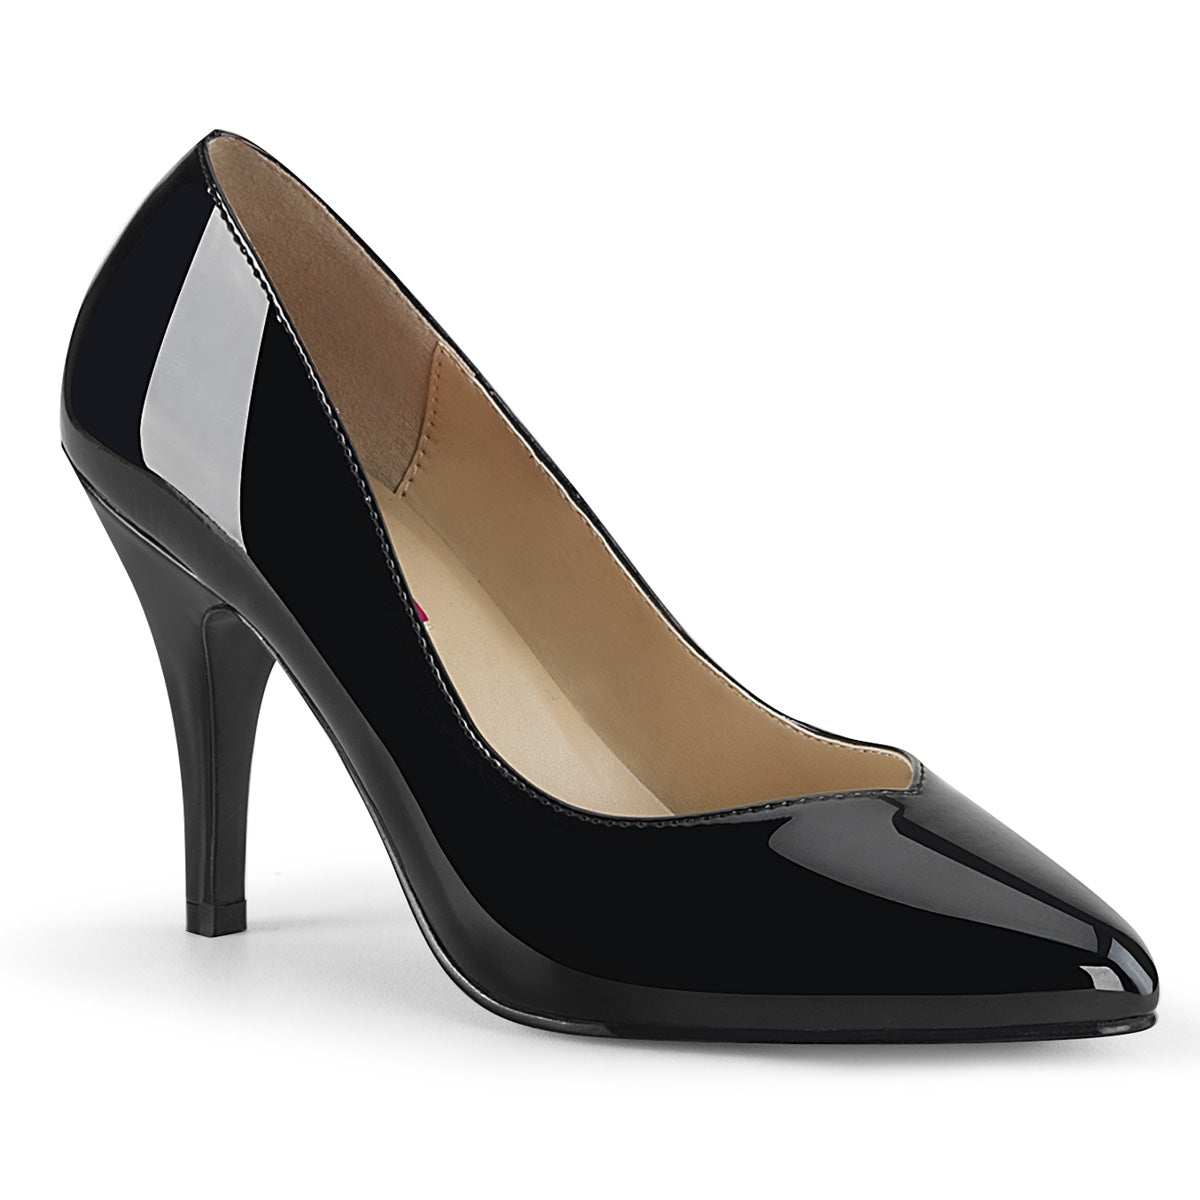 DREAM-420W Large Size Ladies Shoes 4" Heel Black Patent Fetish Footwear